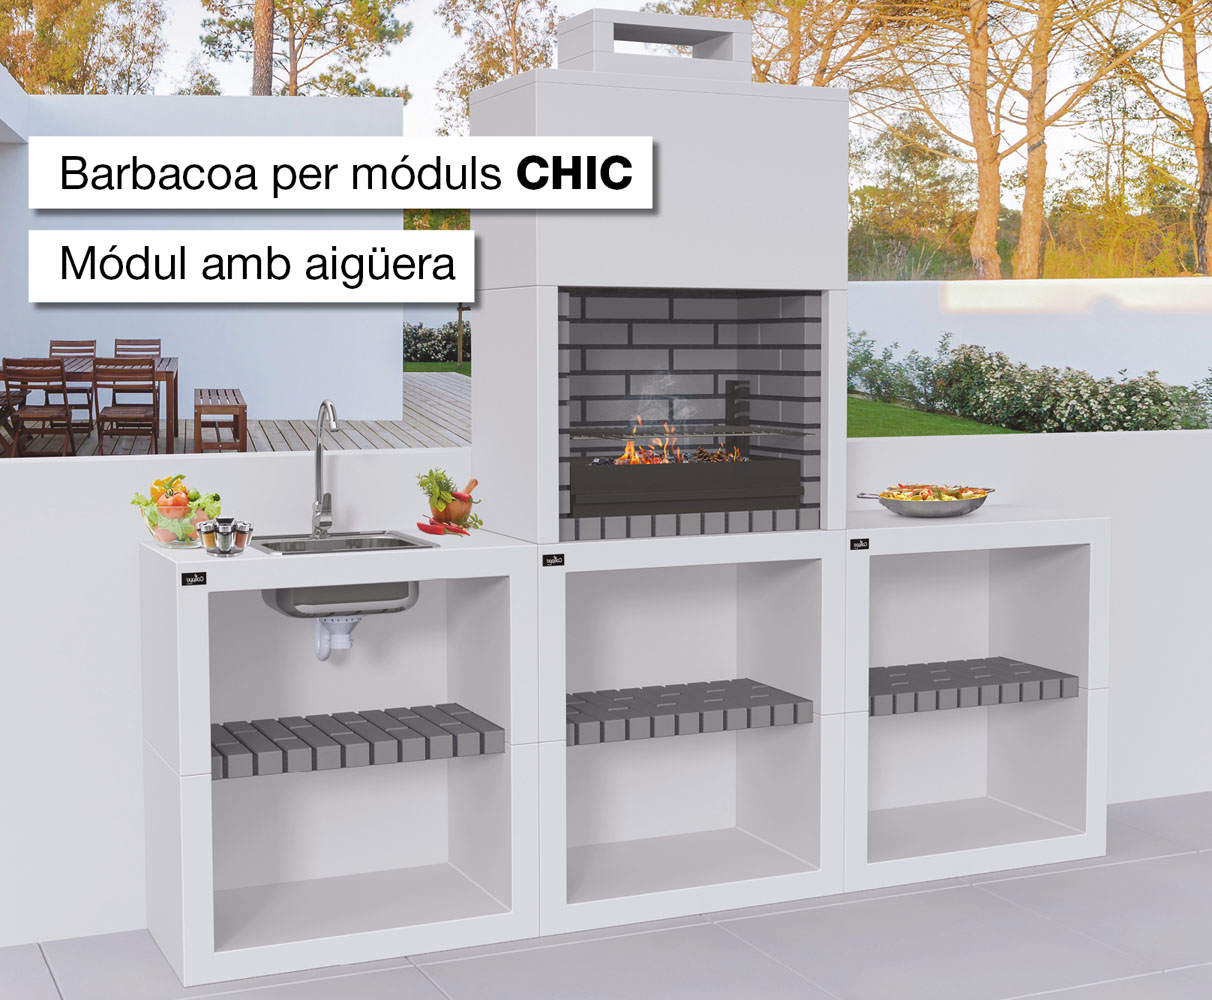 Barbacoa modular CHIC